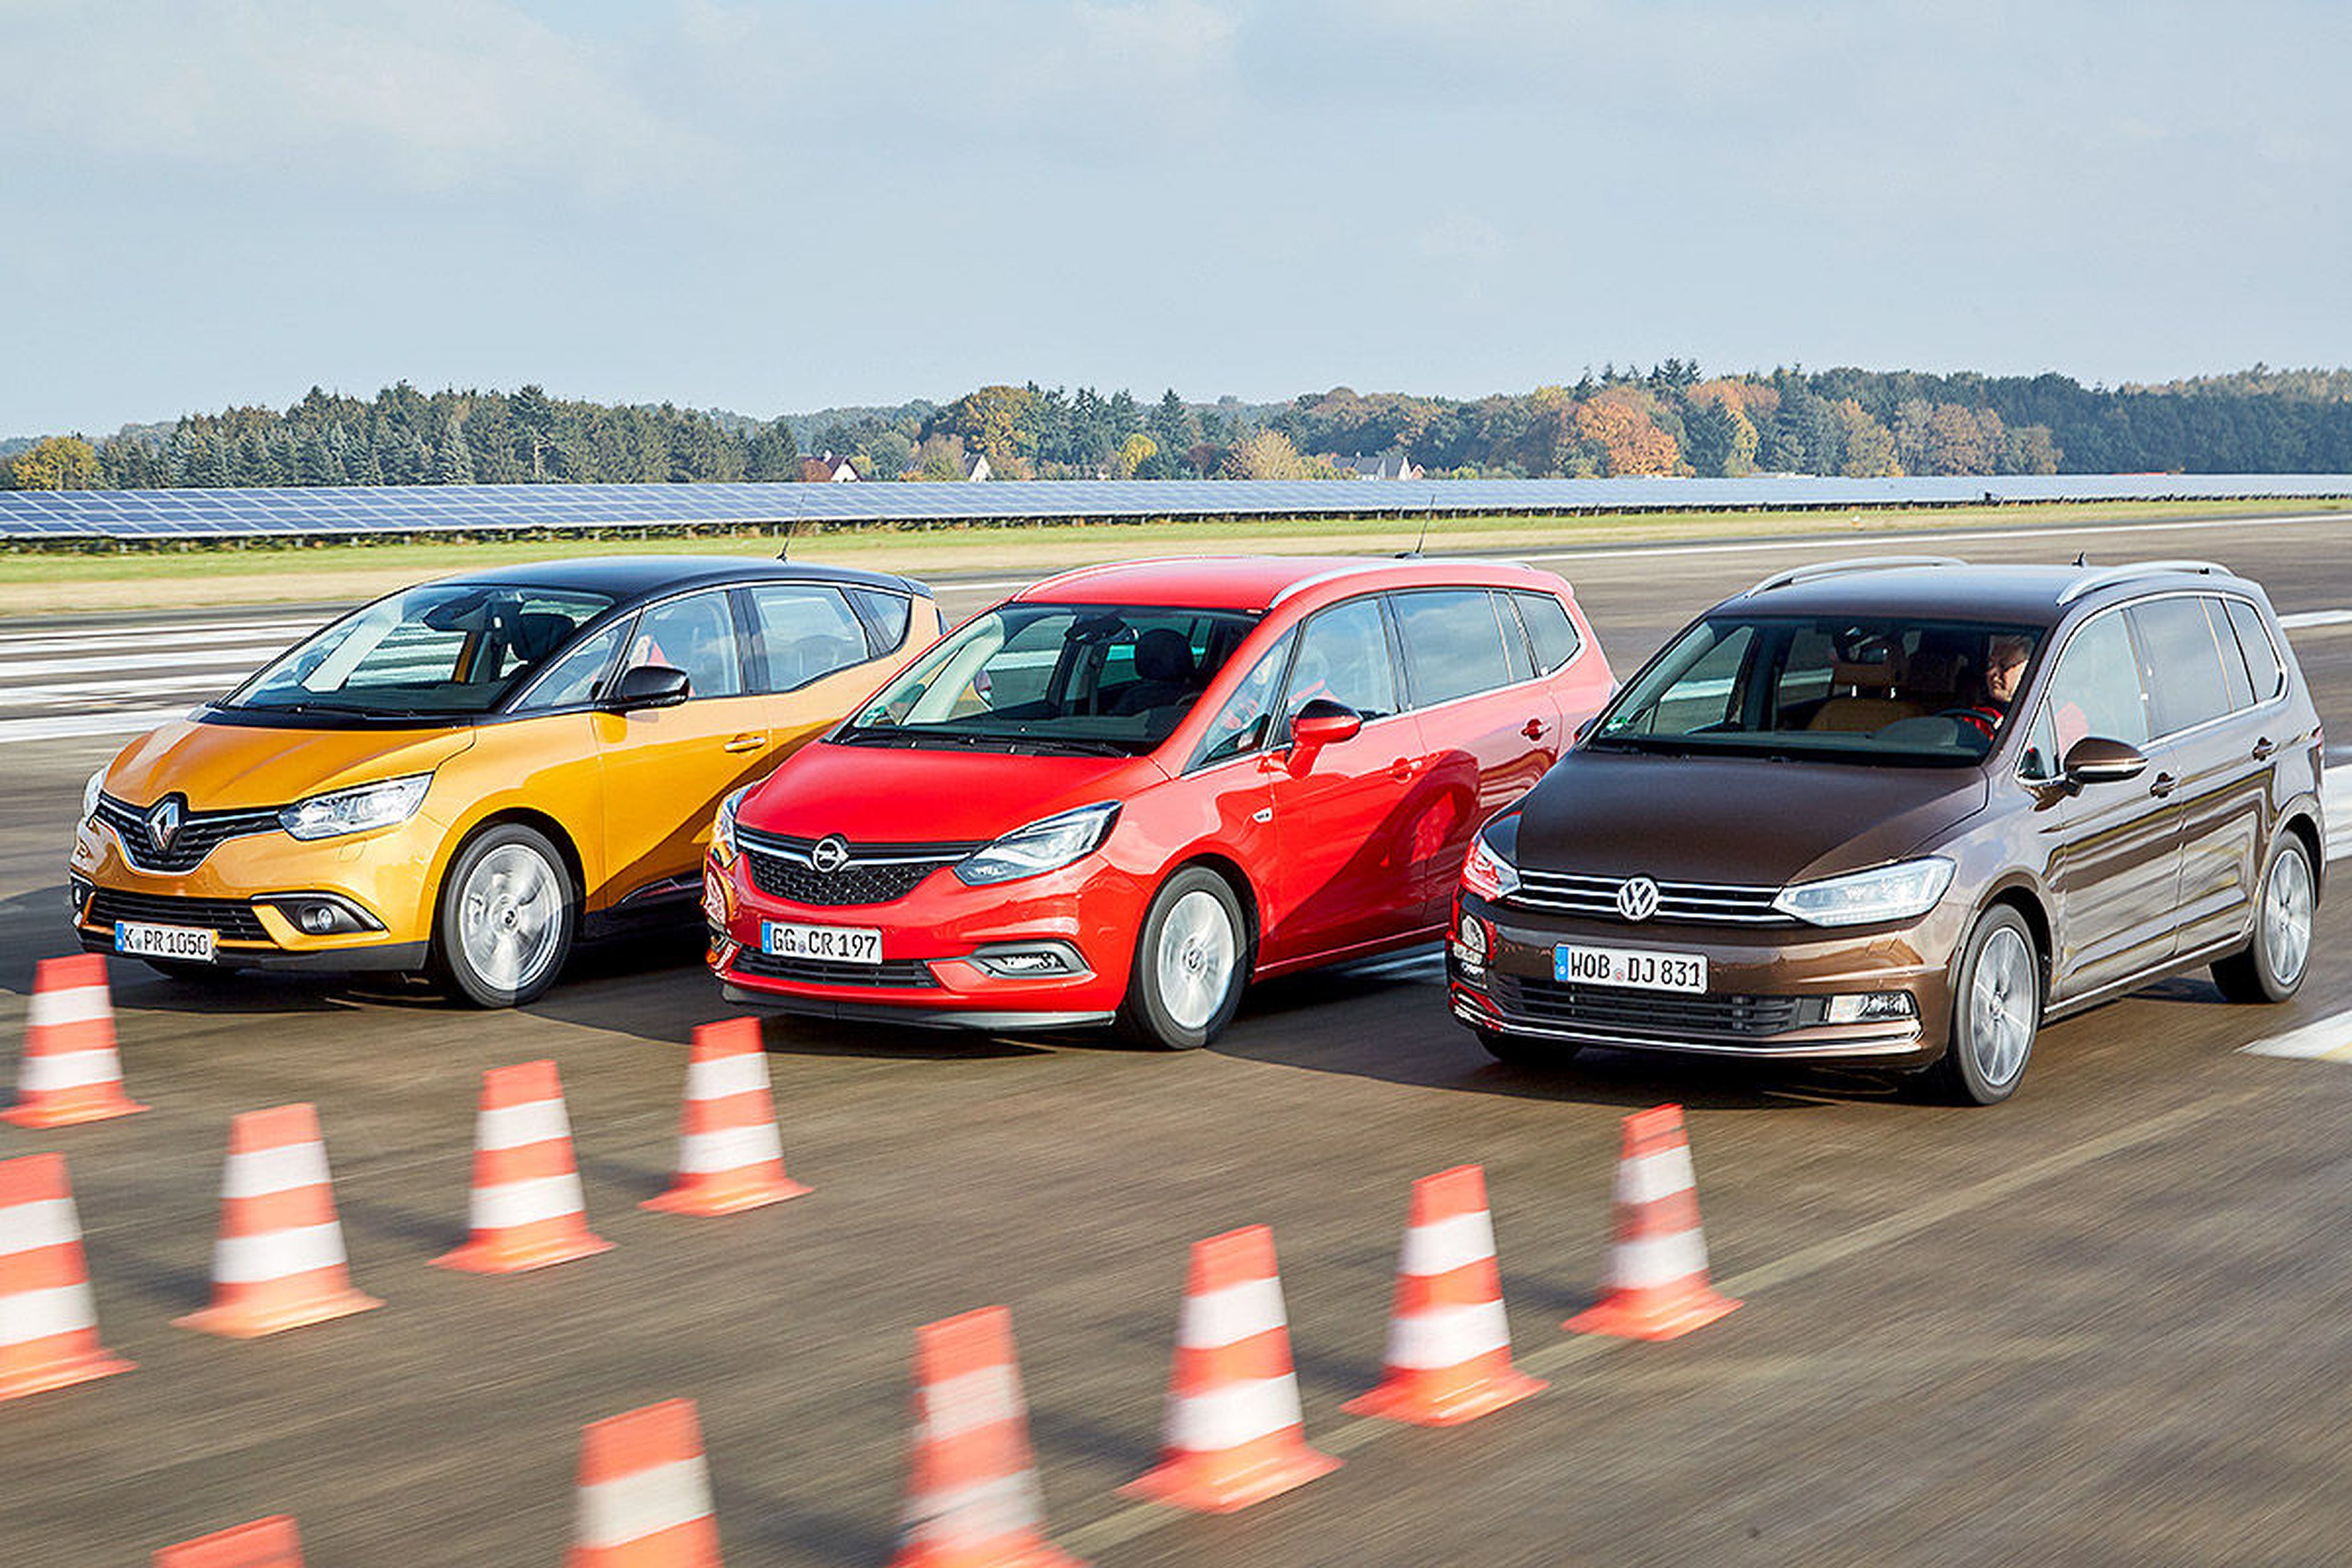 Comparativa: Renault Scénic vs Opel Zafira y VW Touran